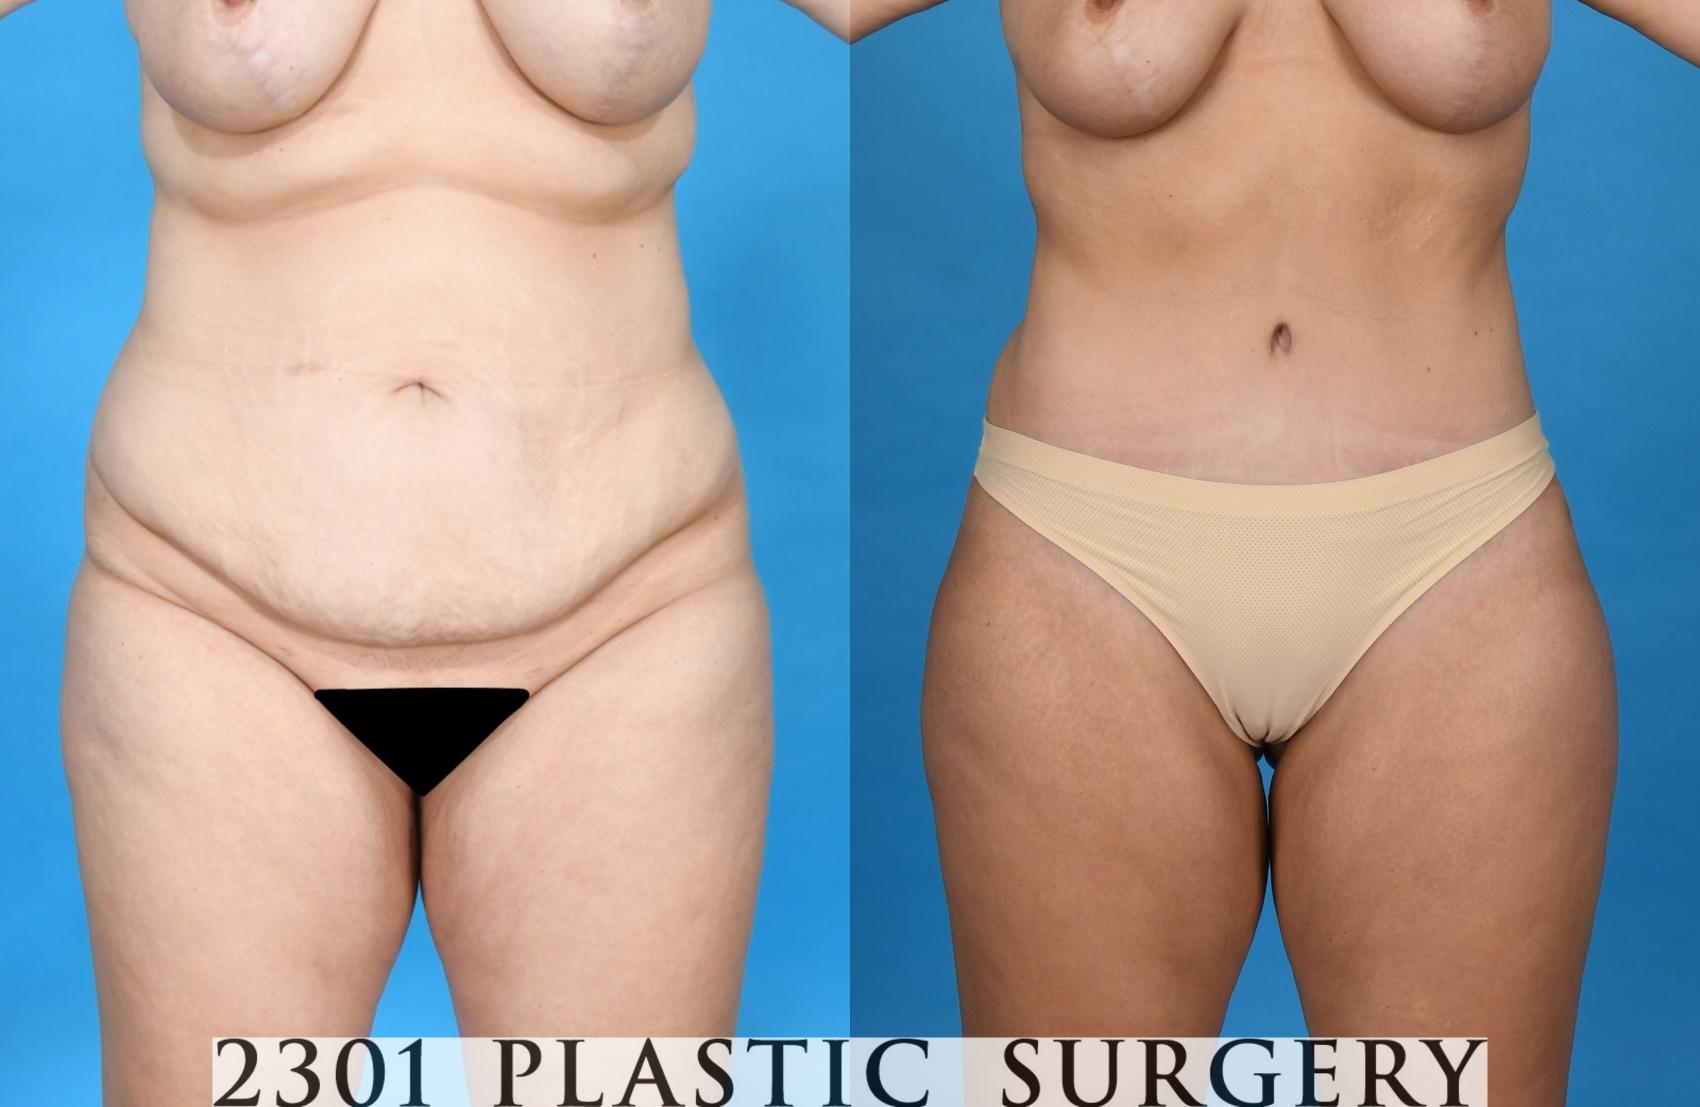 Belt Lipectomy vs. Abdominoplasty for a Complete Tummy Transformation